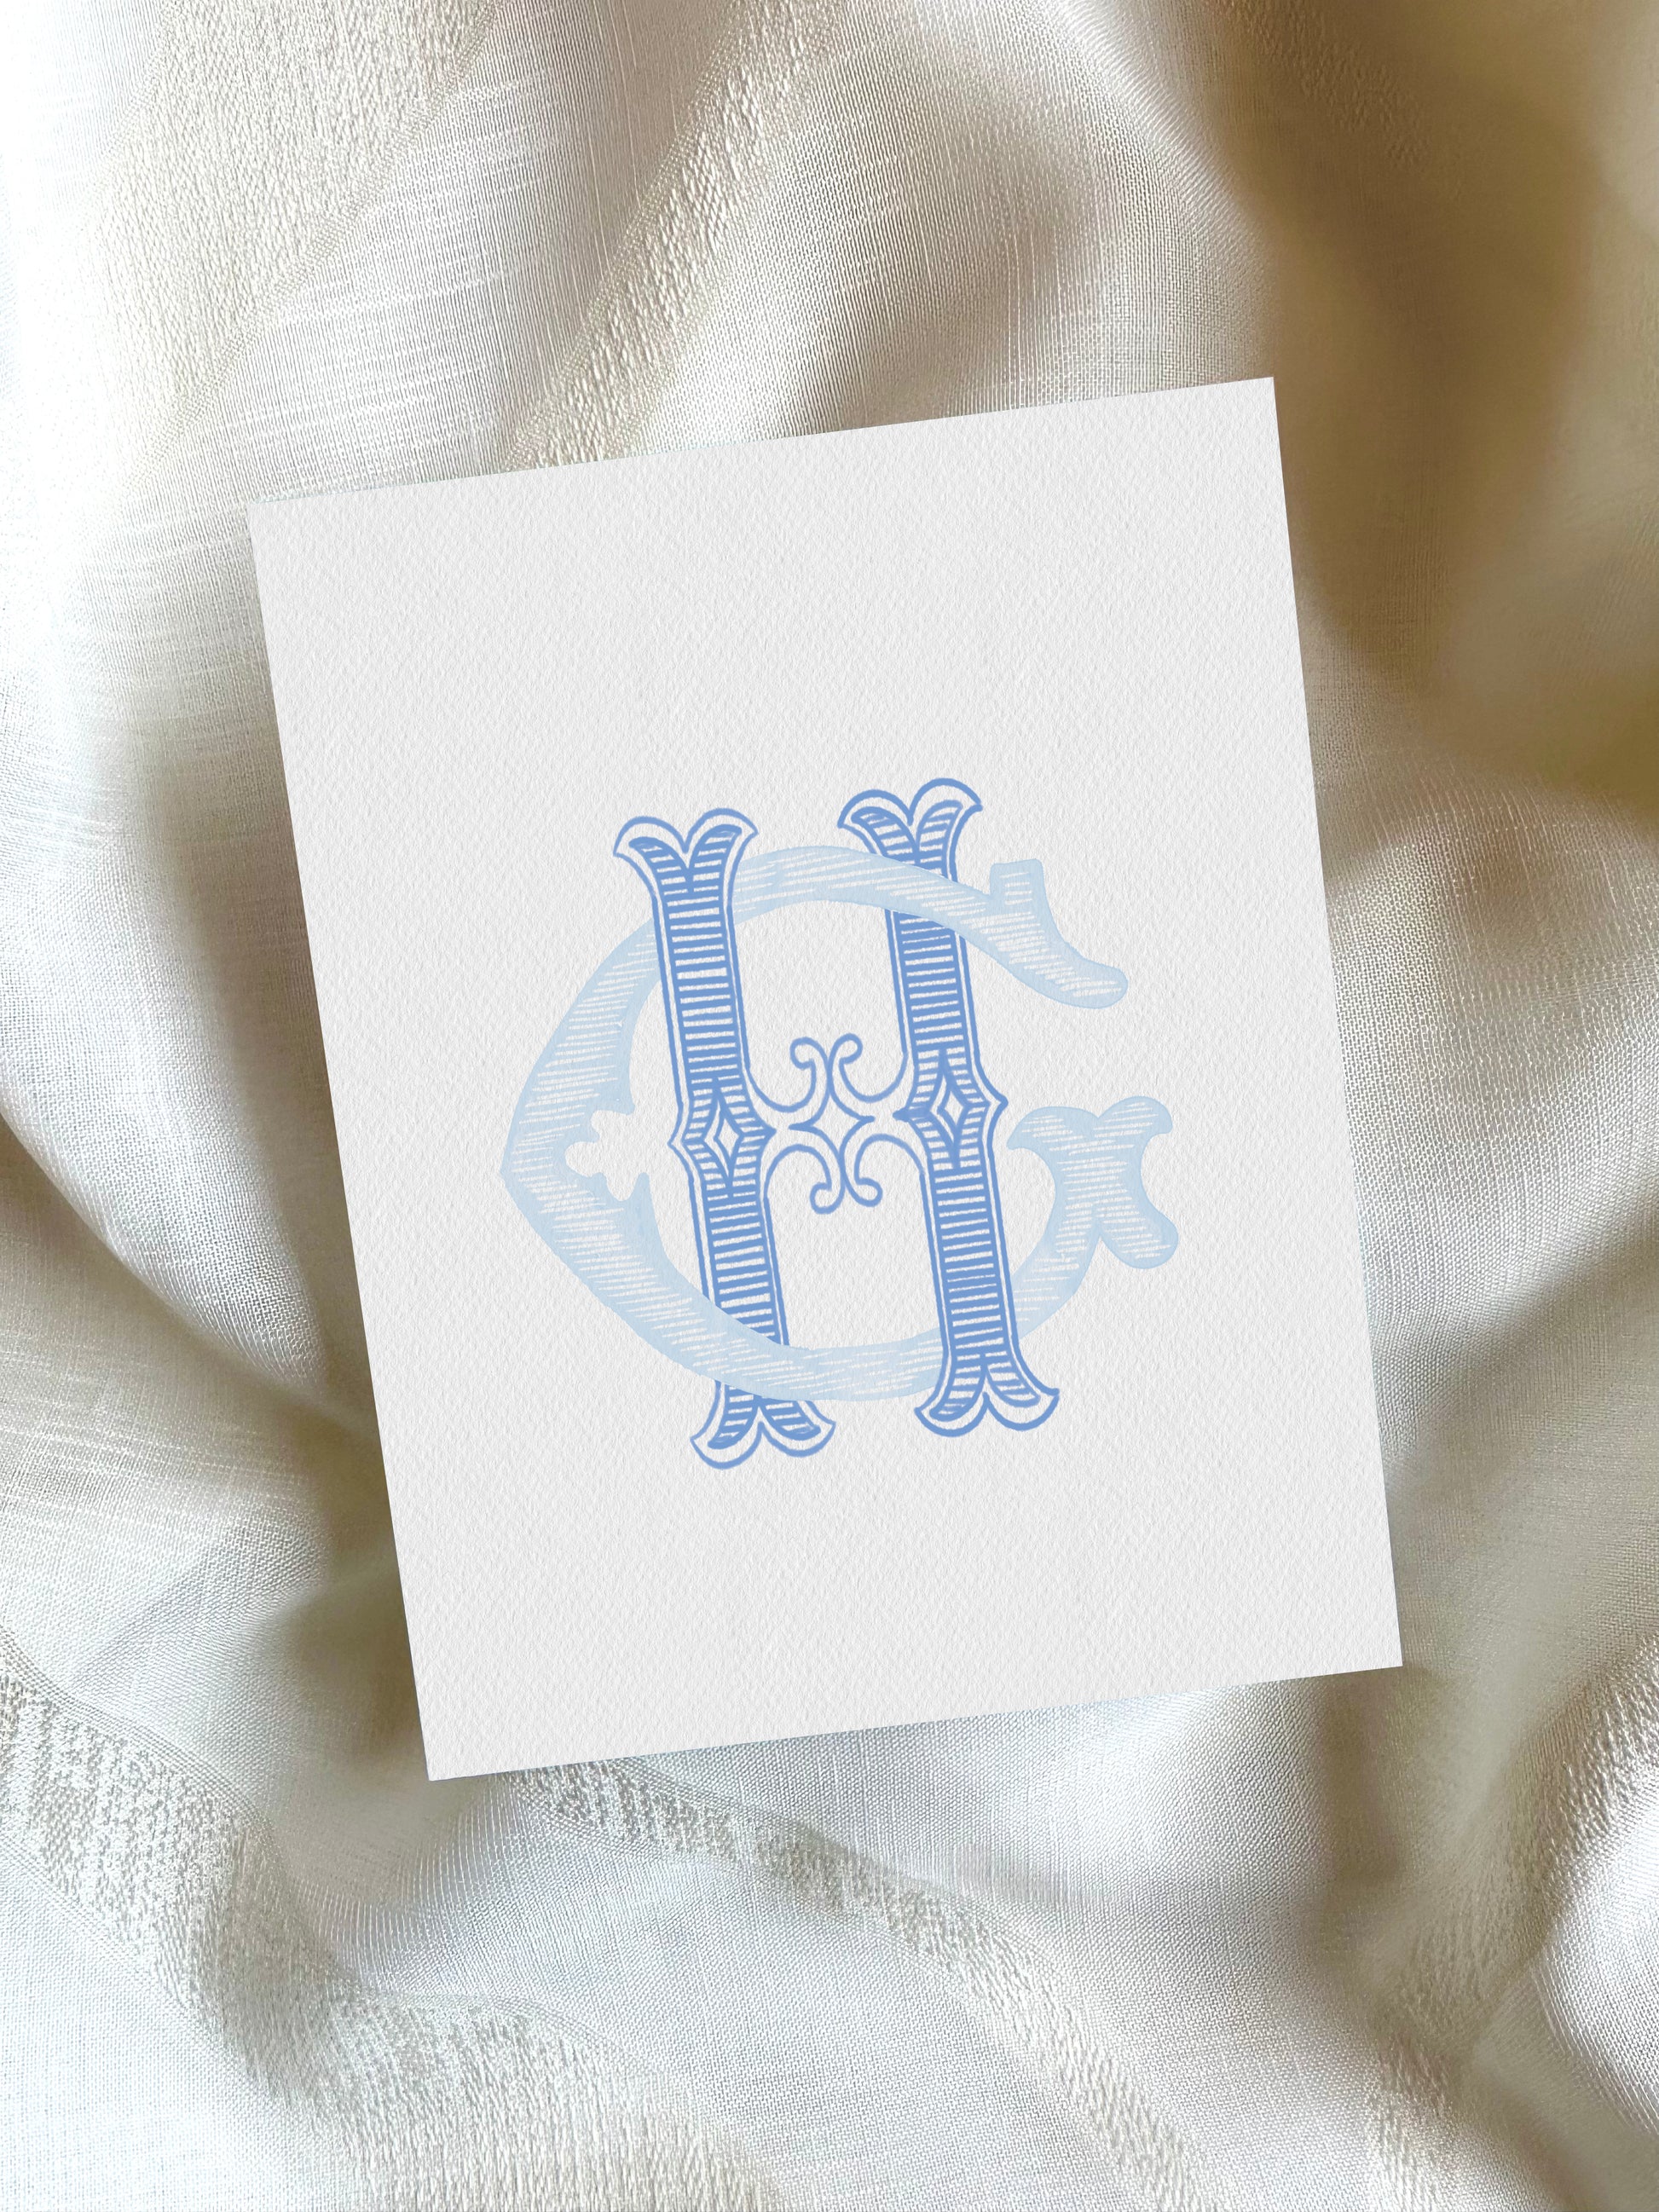 2 Letter Monogram with Letters GH HG | Digital Download - Wedding Monogram SVG, Personal Logo, Wedding Logo for Wedding Invitations The Wedding Crest Lab